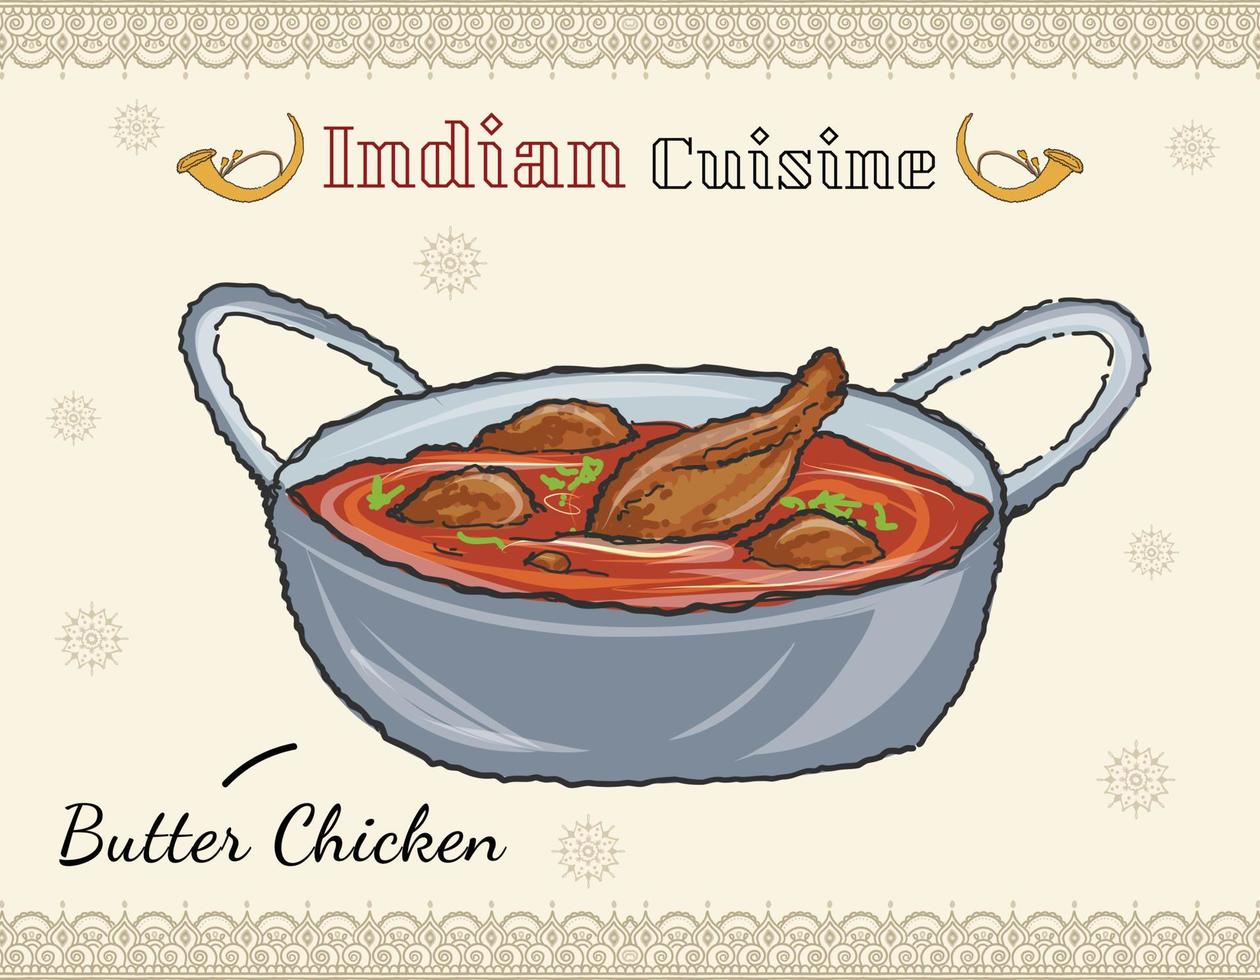 comida tradicional india, carne en salsa de tomate especiada. comida india de mantequilla de pollo con pan nan y rodaja de limón. ilustración de menú de restaurante o dhaba. vector